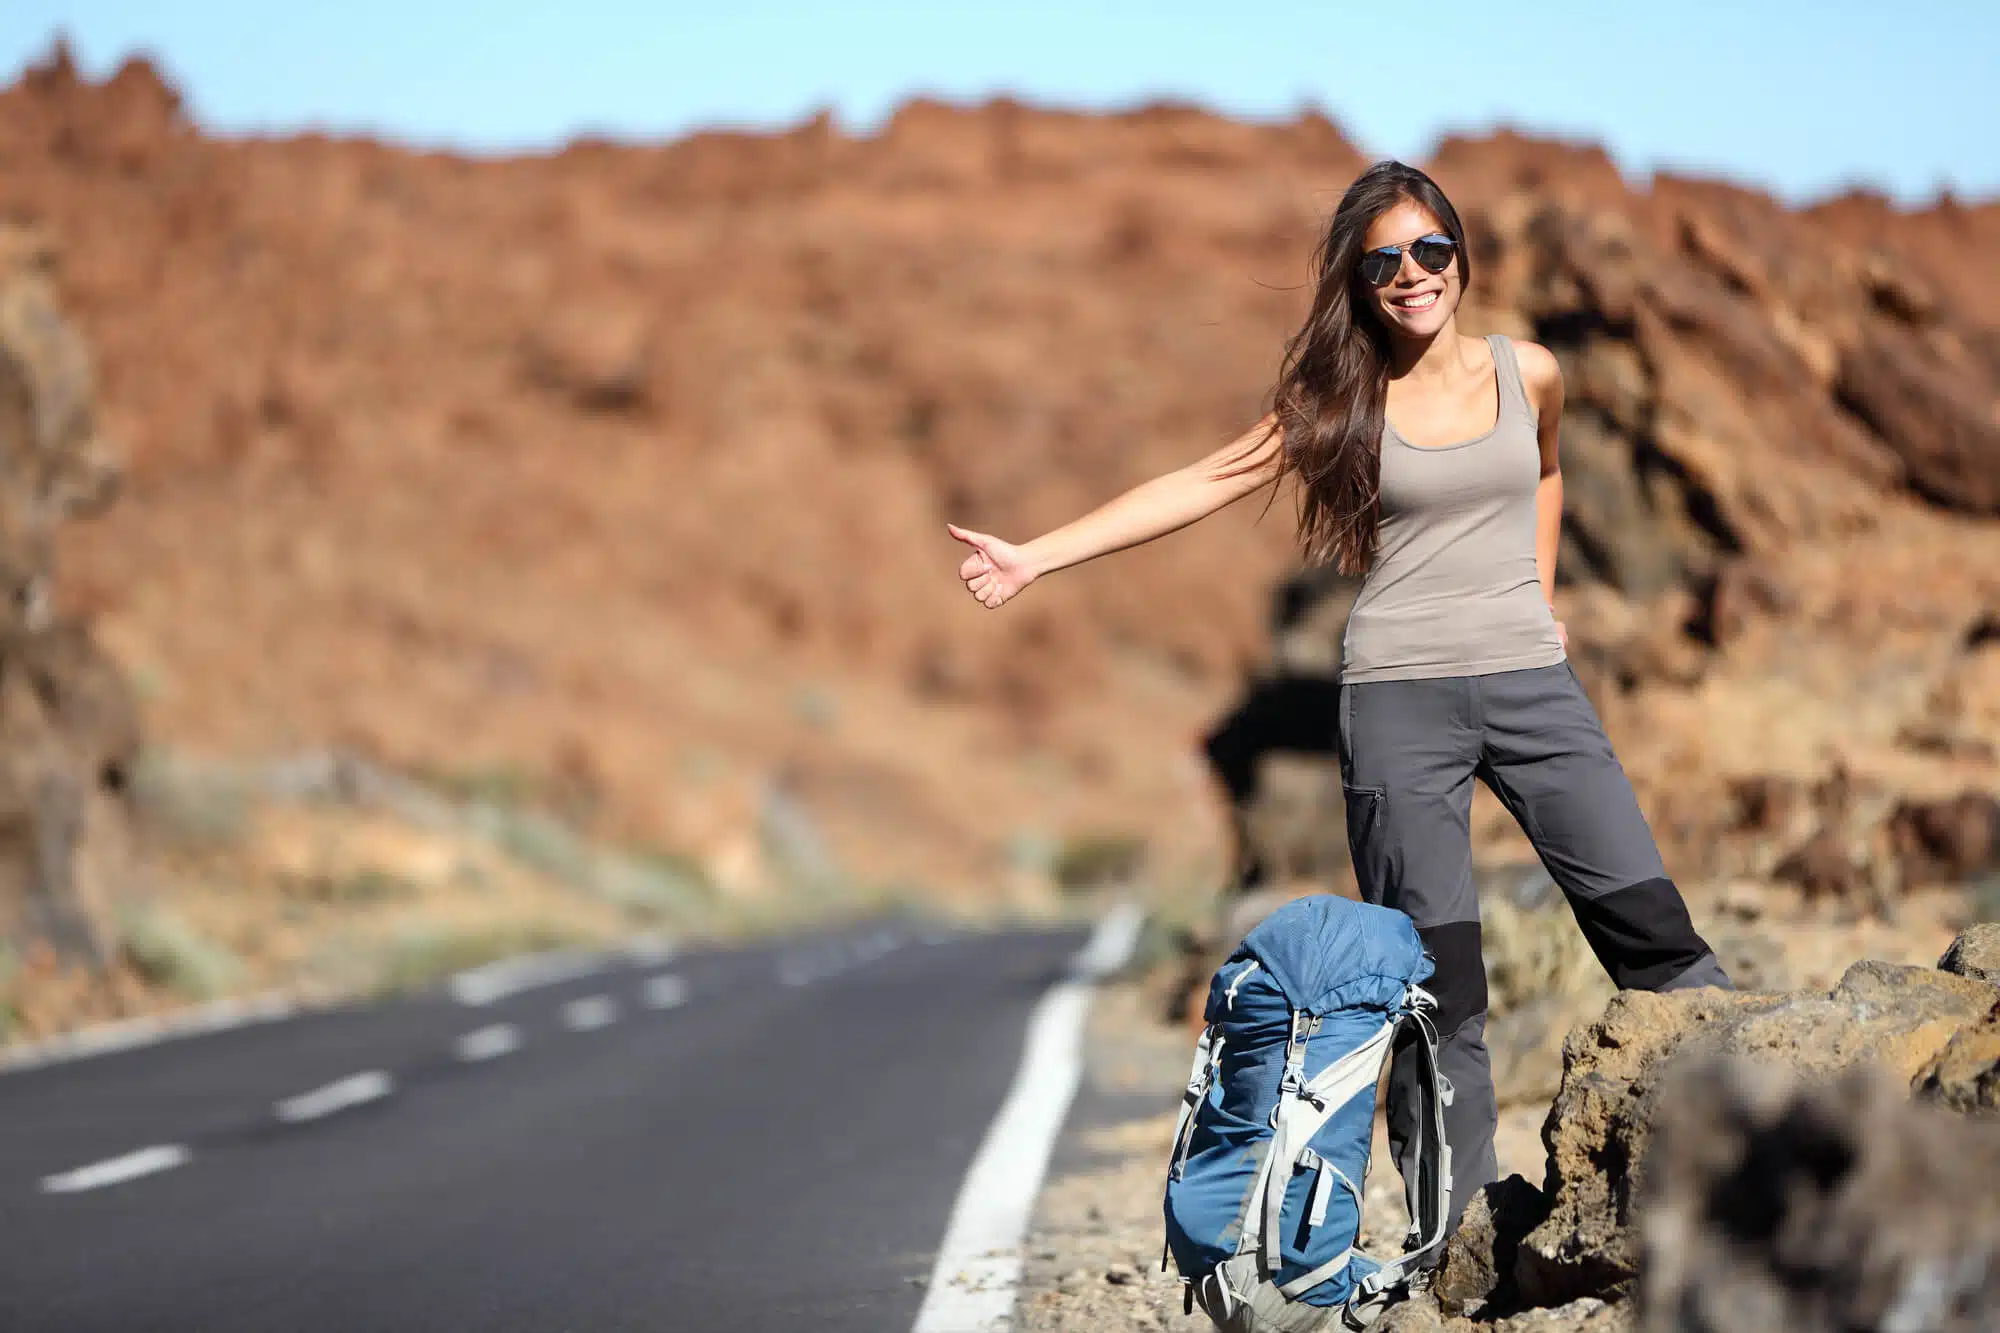 A woman hitchhikes. Image: depositphotos.com